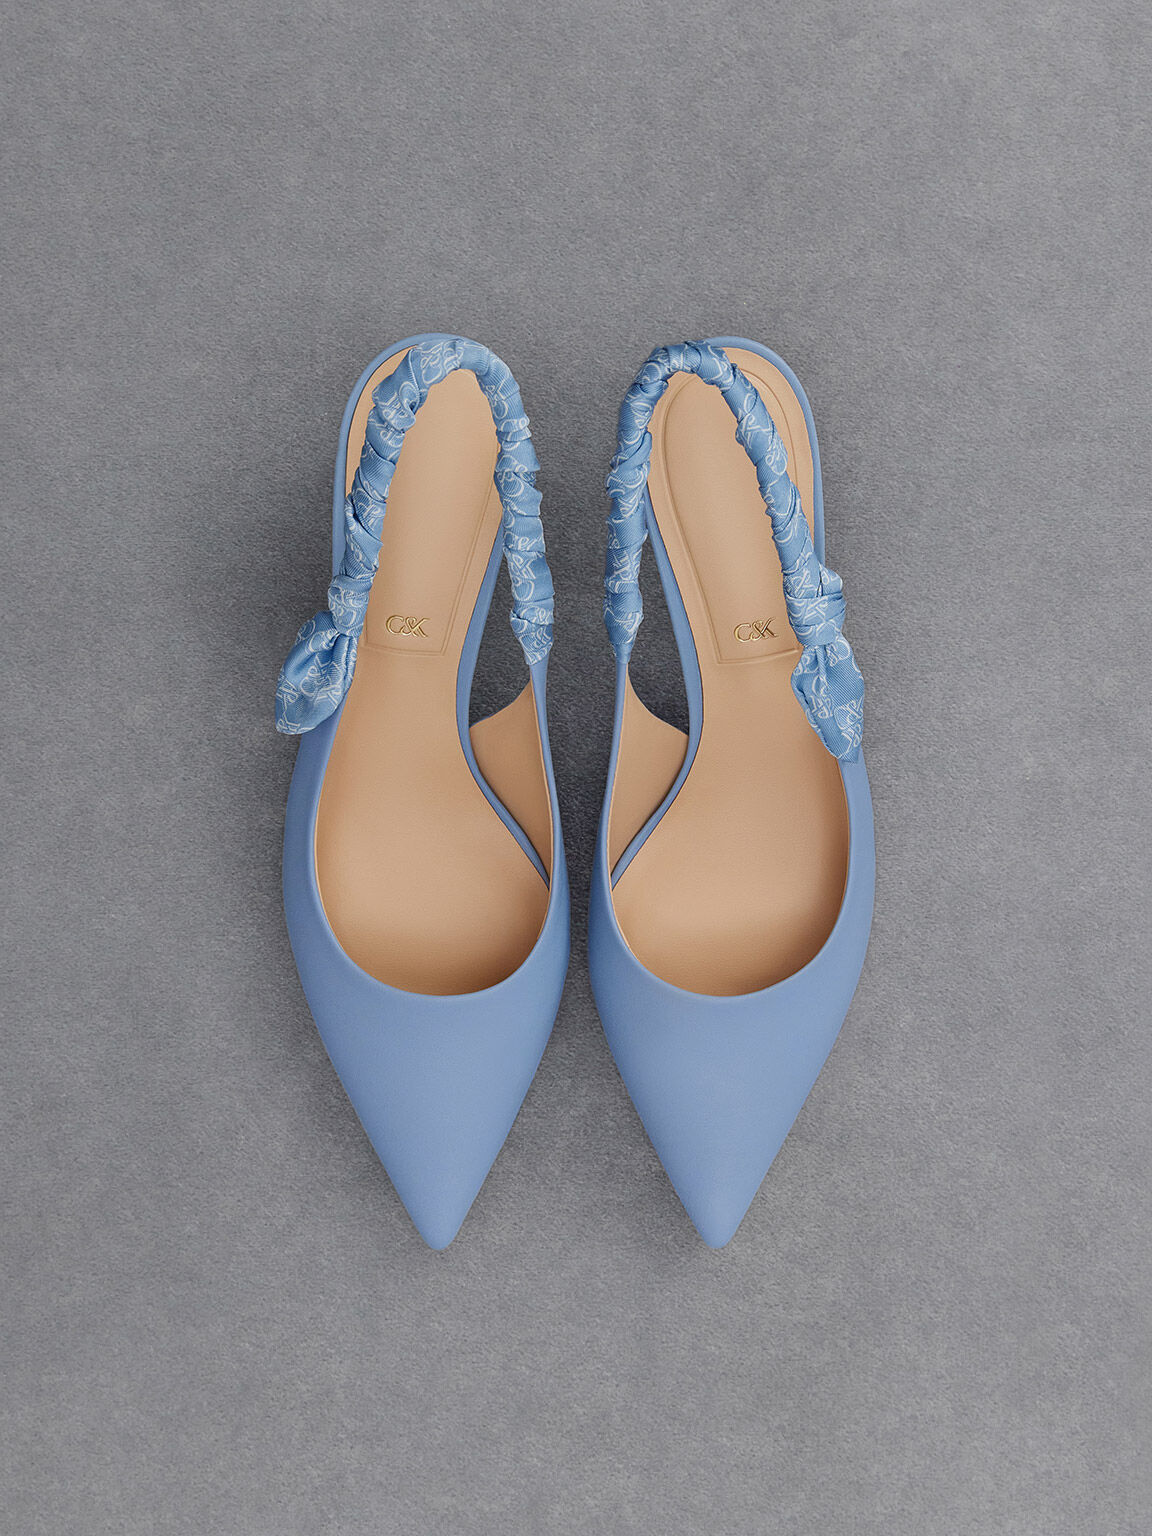 ZAINT BLUE Mules | Buy Women's HEELS Online | Novo Shoes NZ